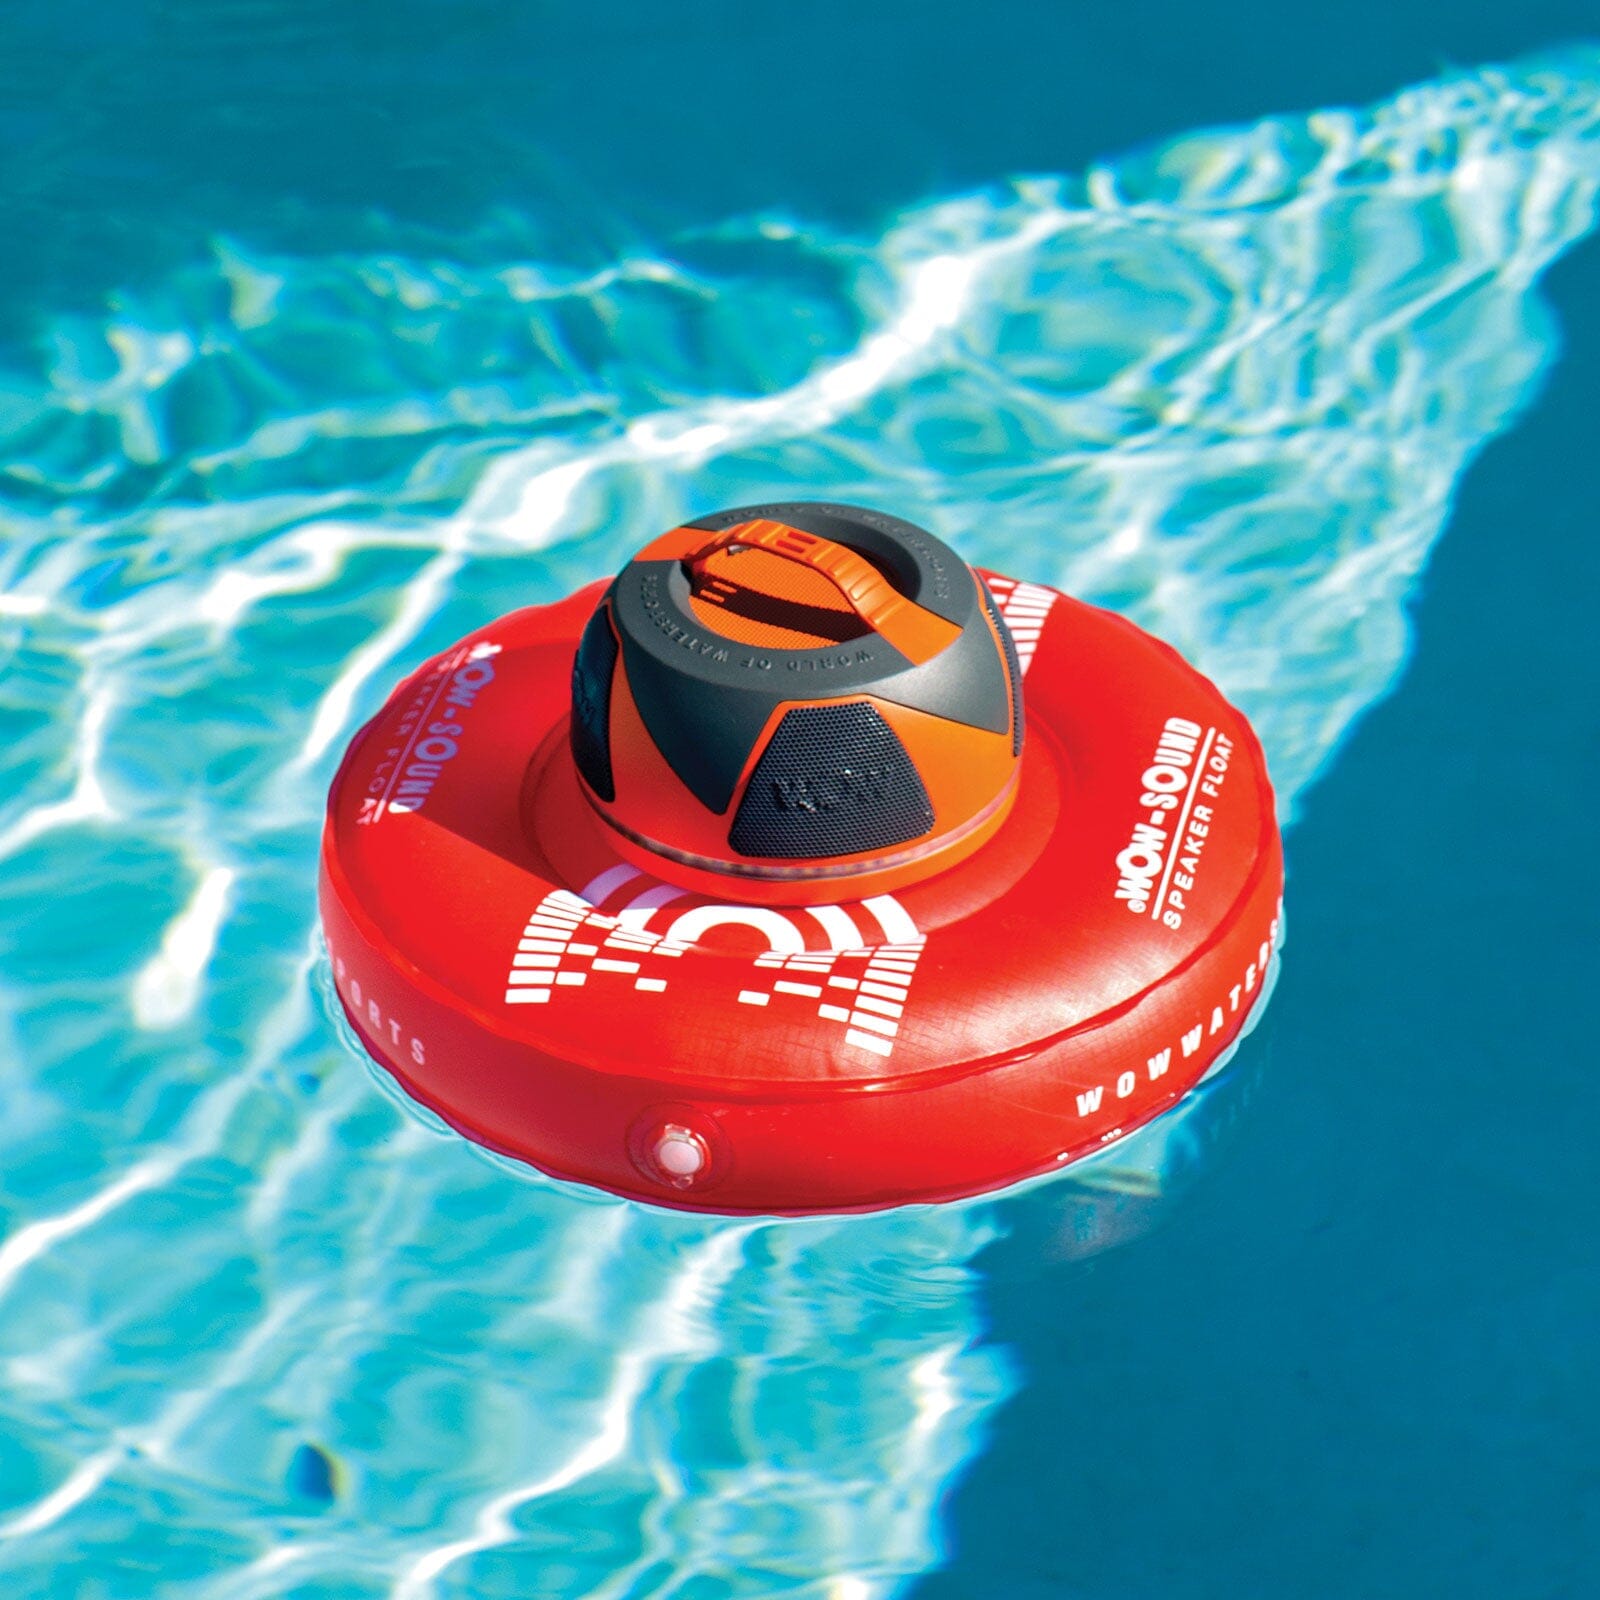 WOW Sound Speaker Float